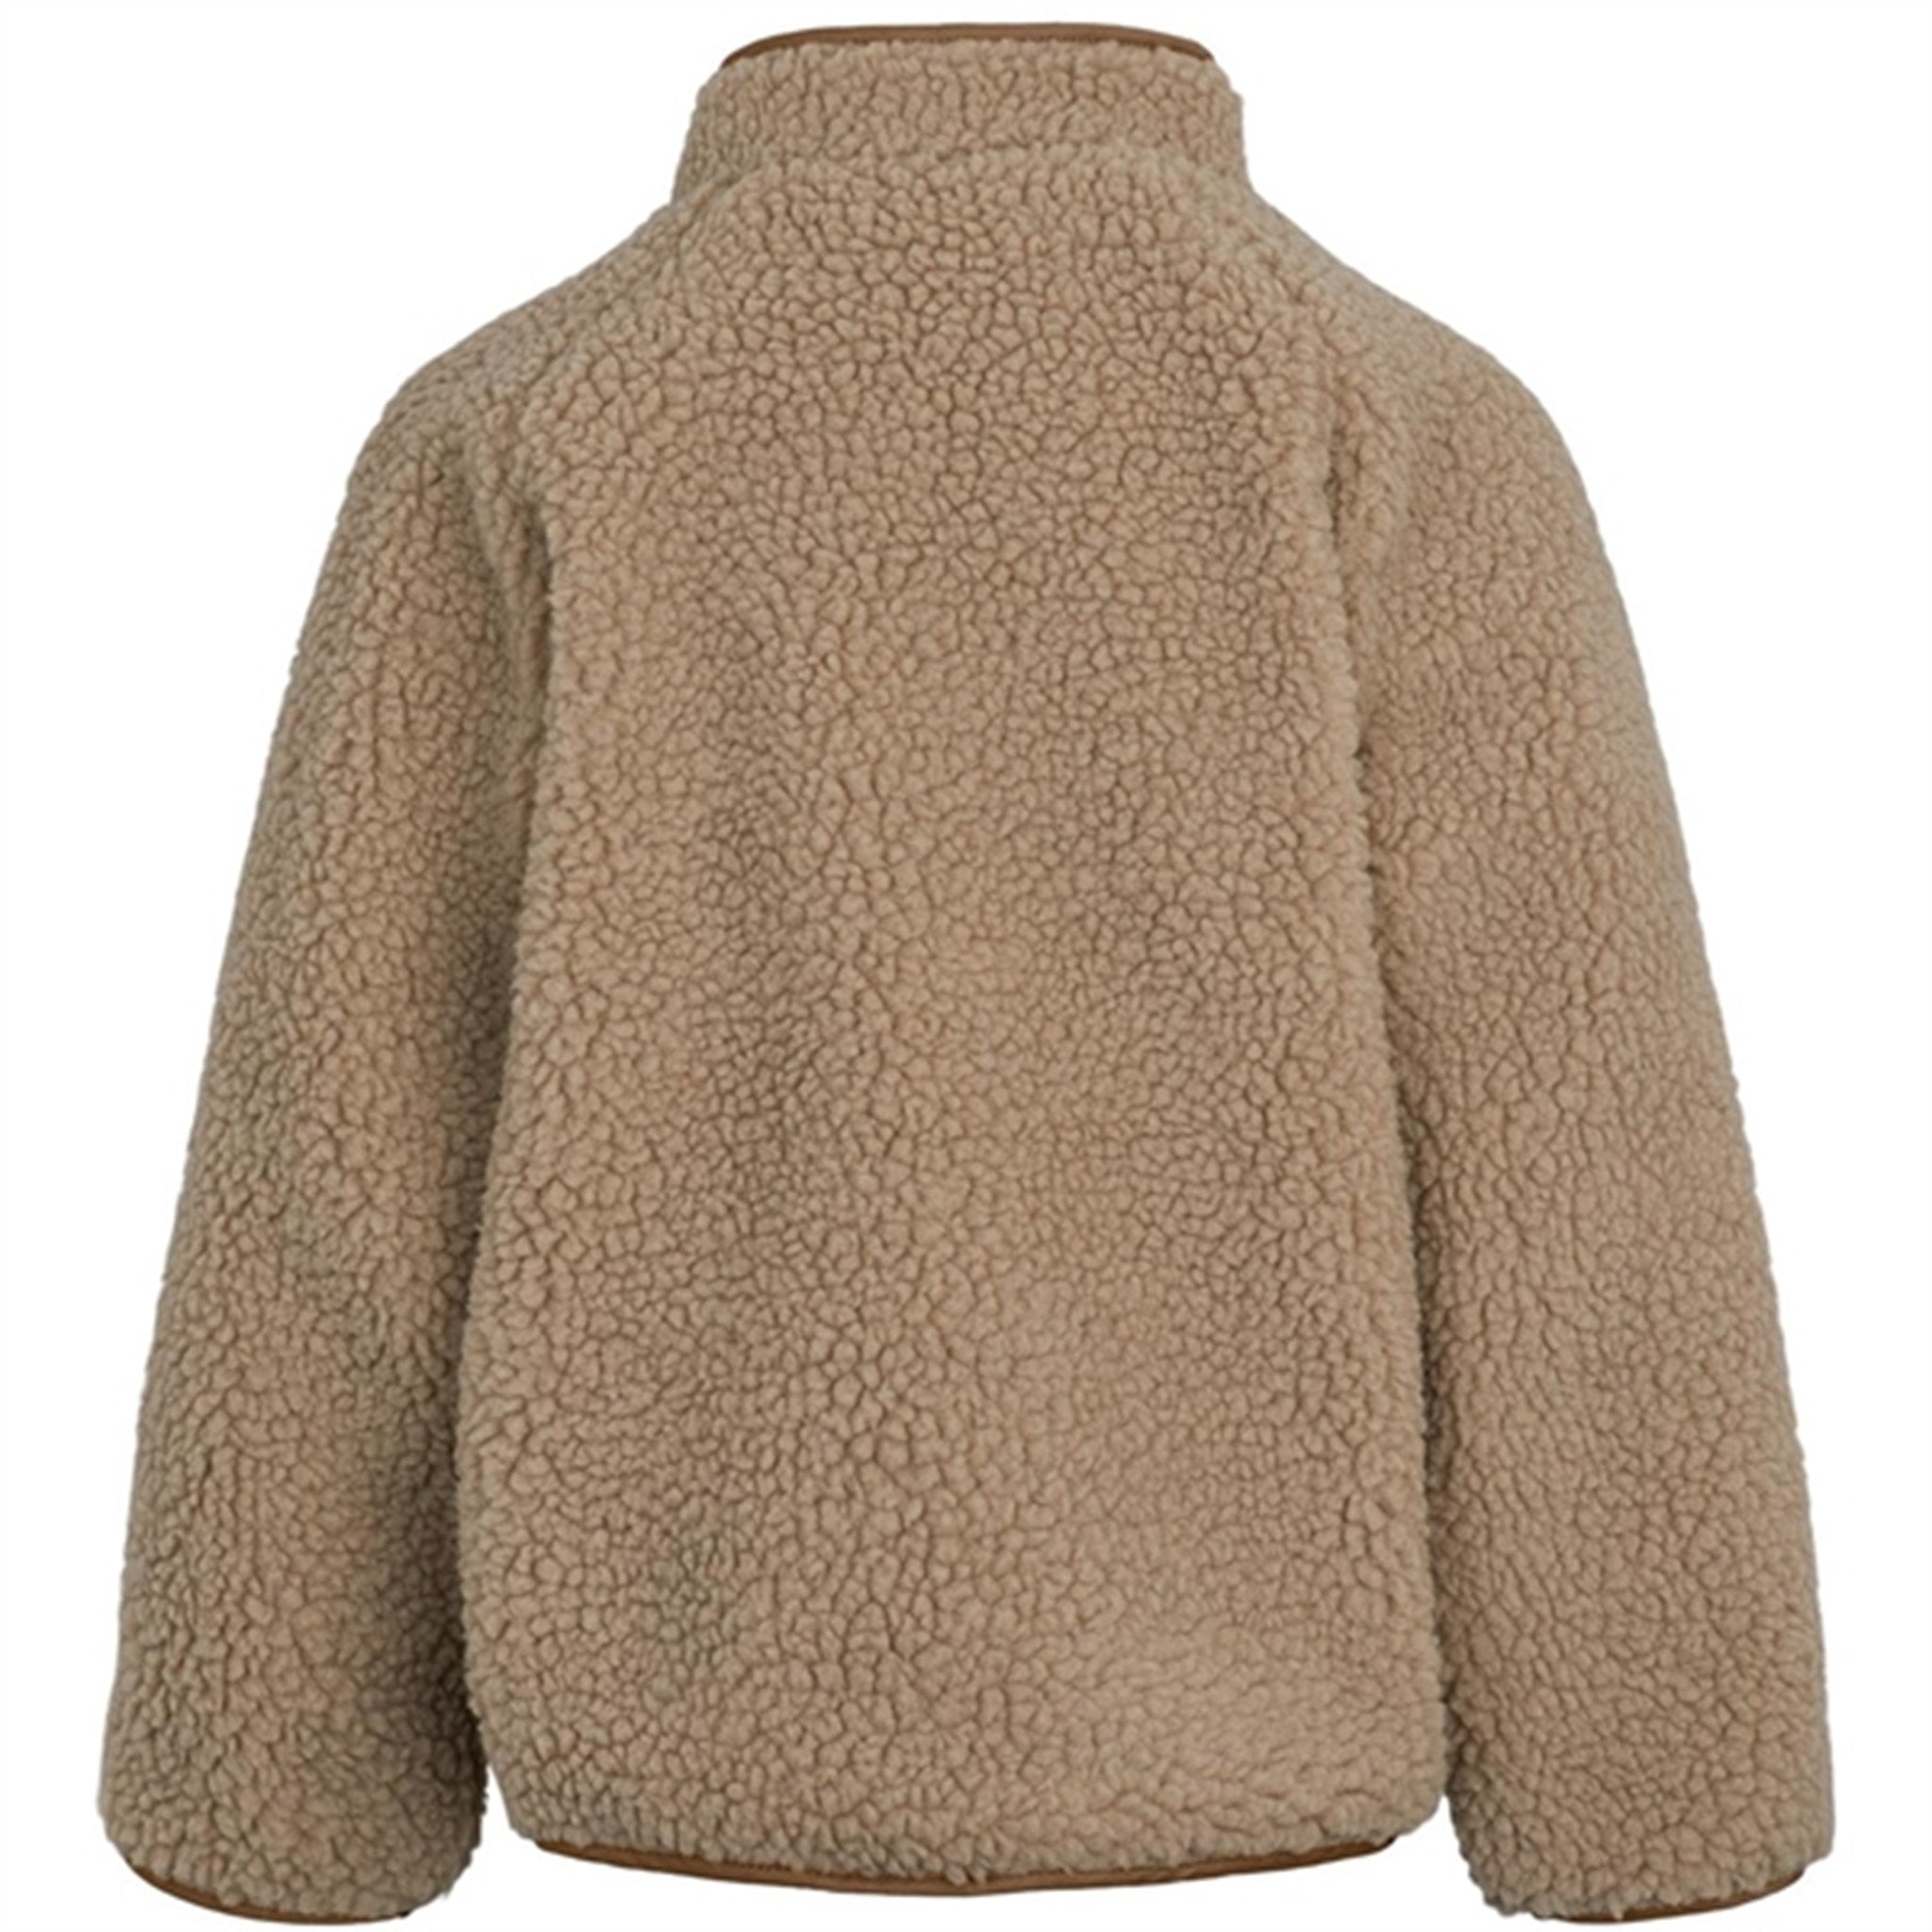 MarMar Jerry Teddybear Fleece Jacket Sandstone 7